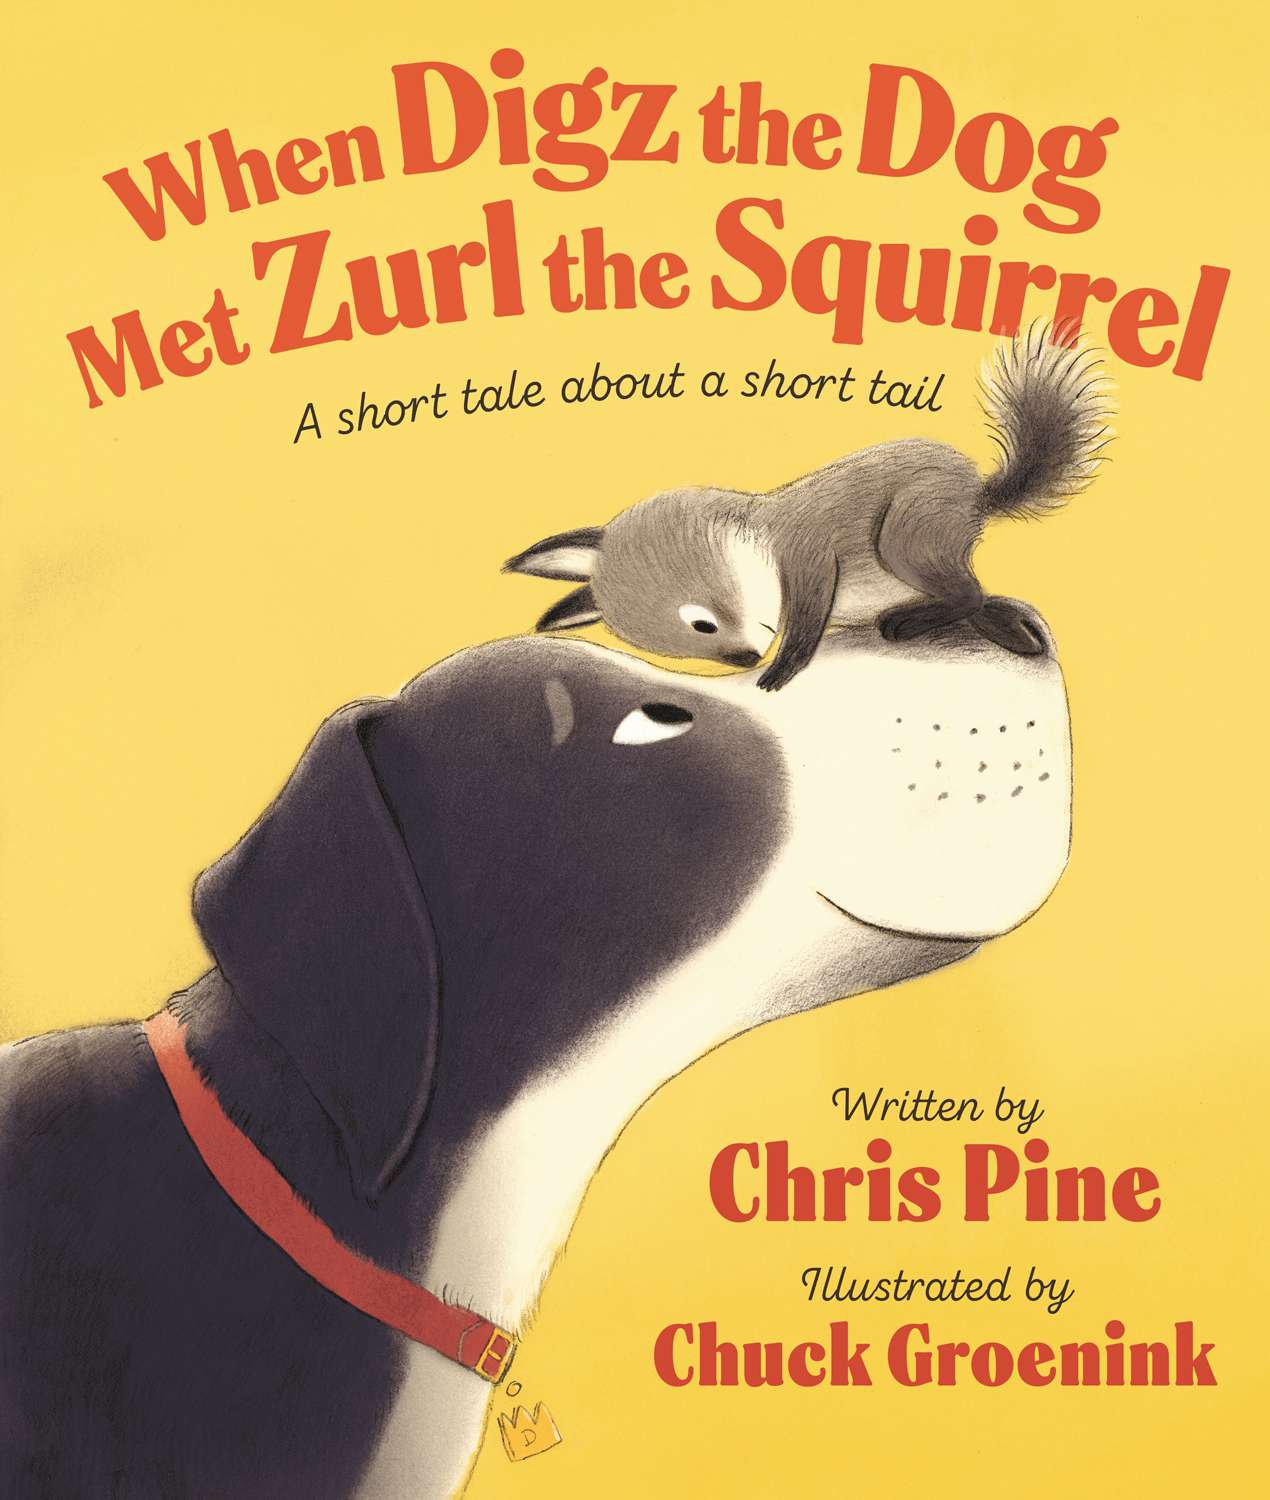 Chris Pine children's book